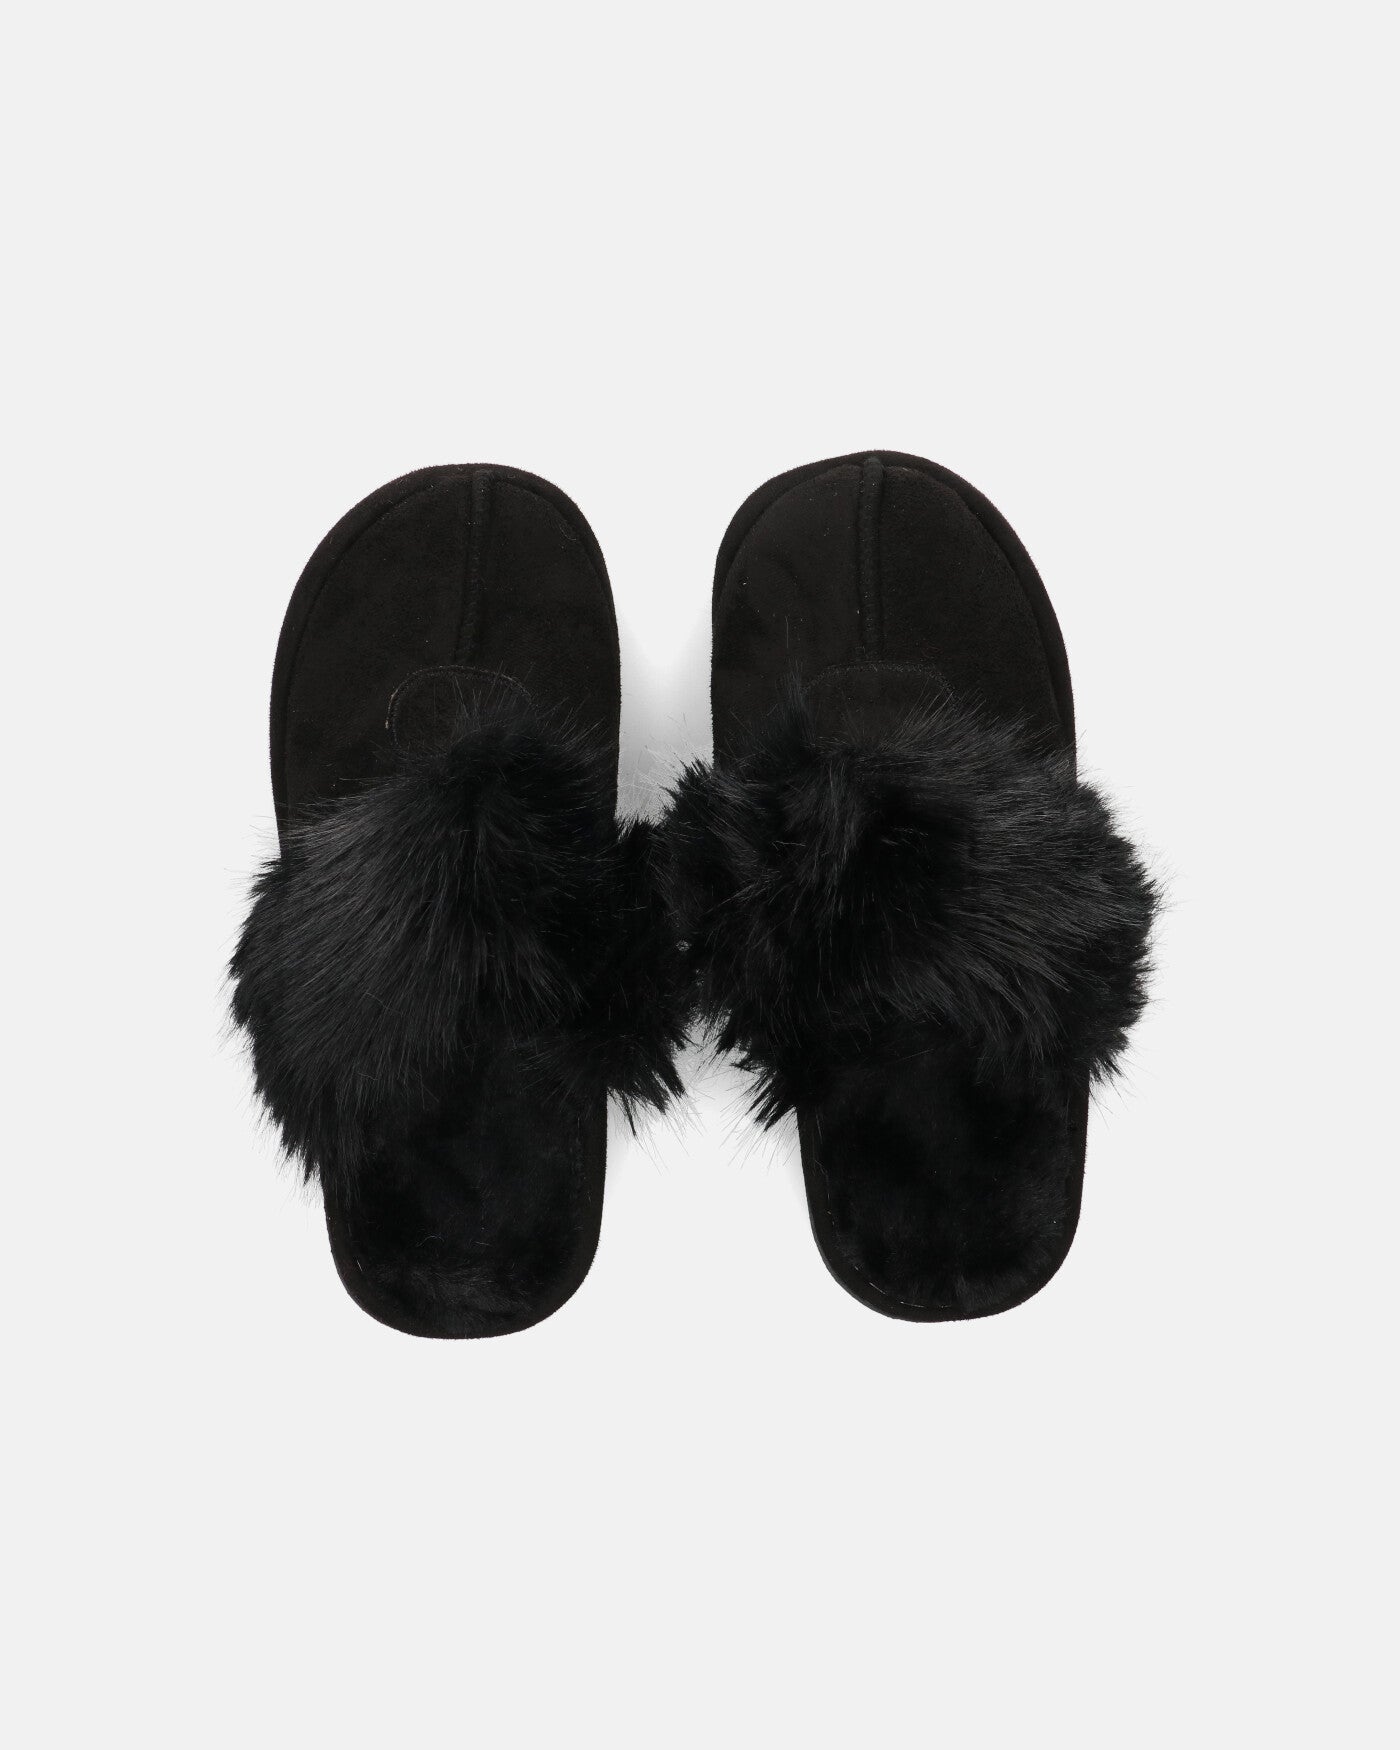 MIDORI - pantofole nere con pelliccia e camoscio